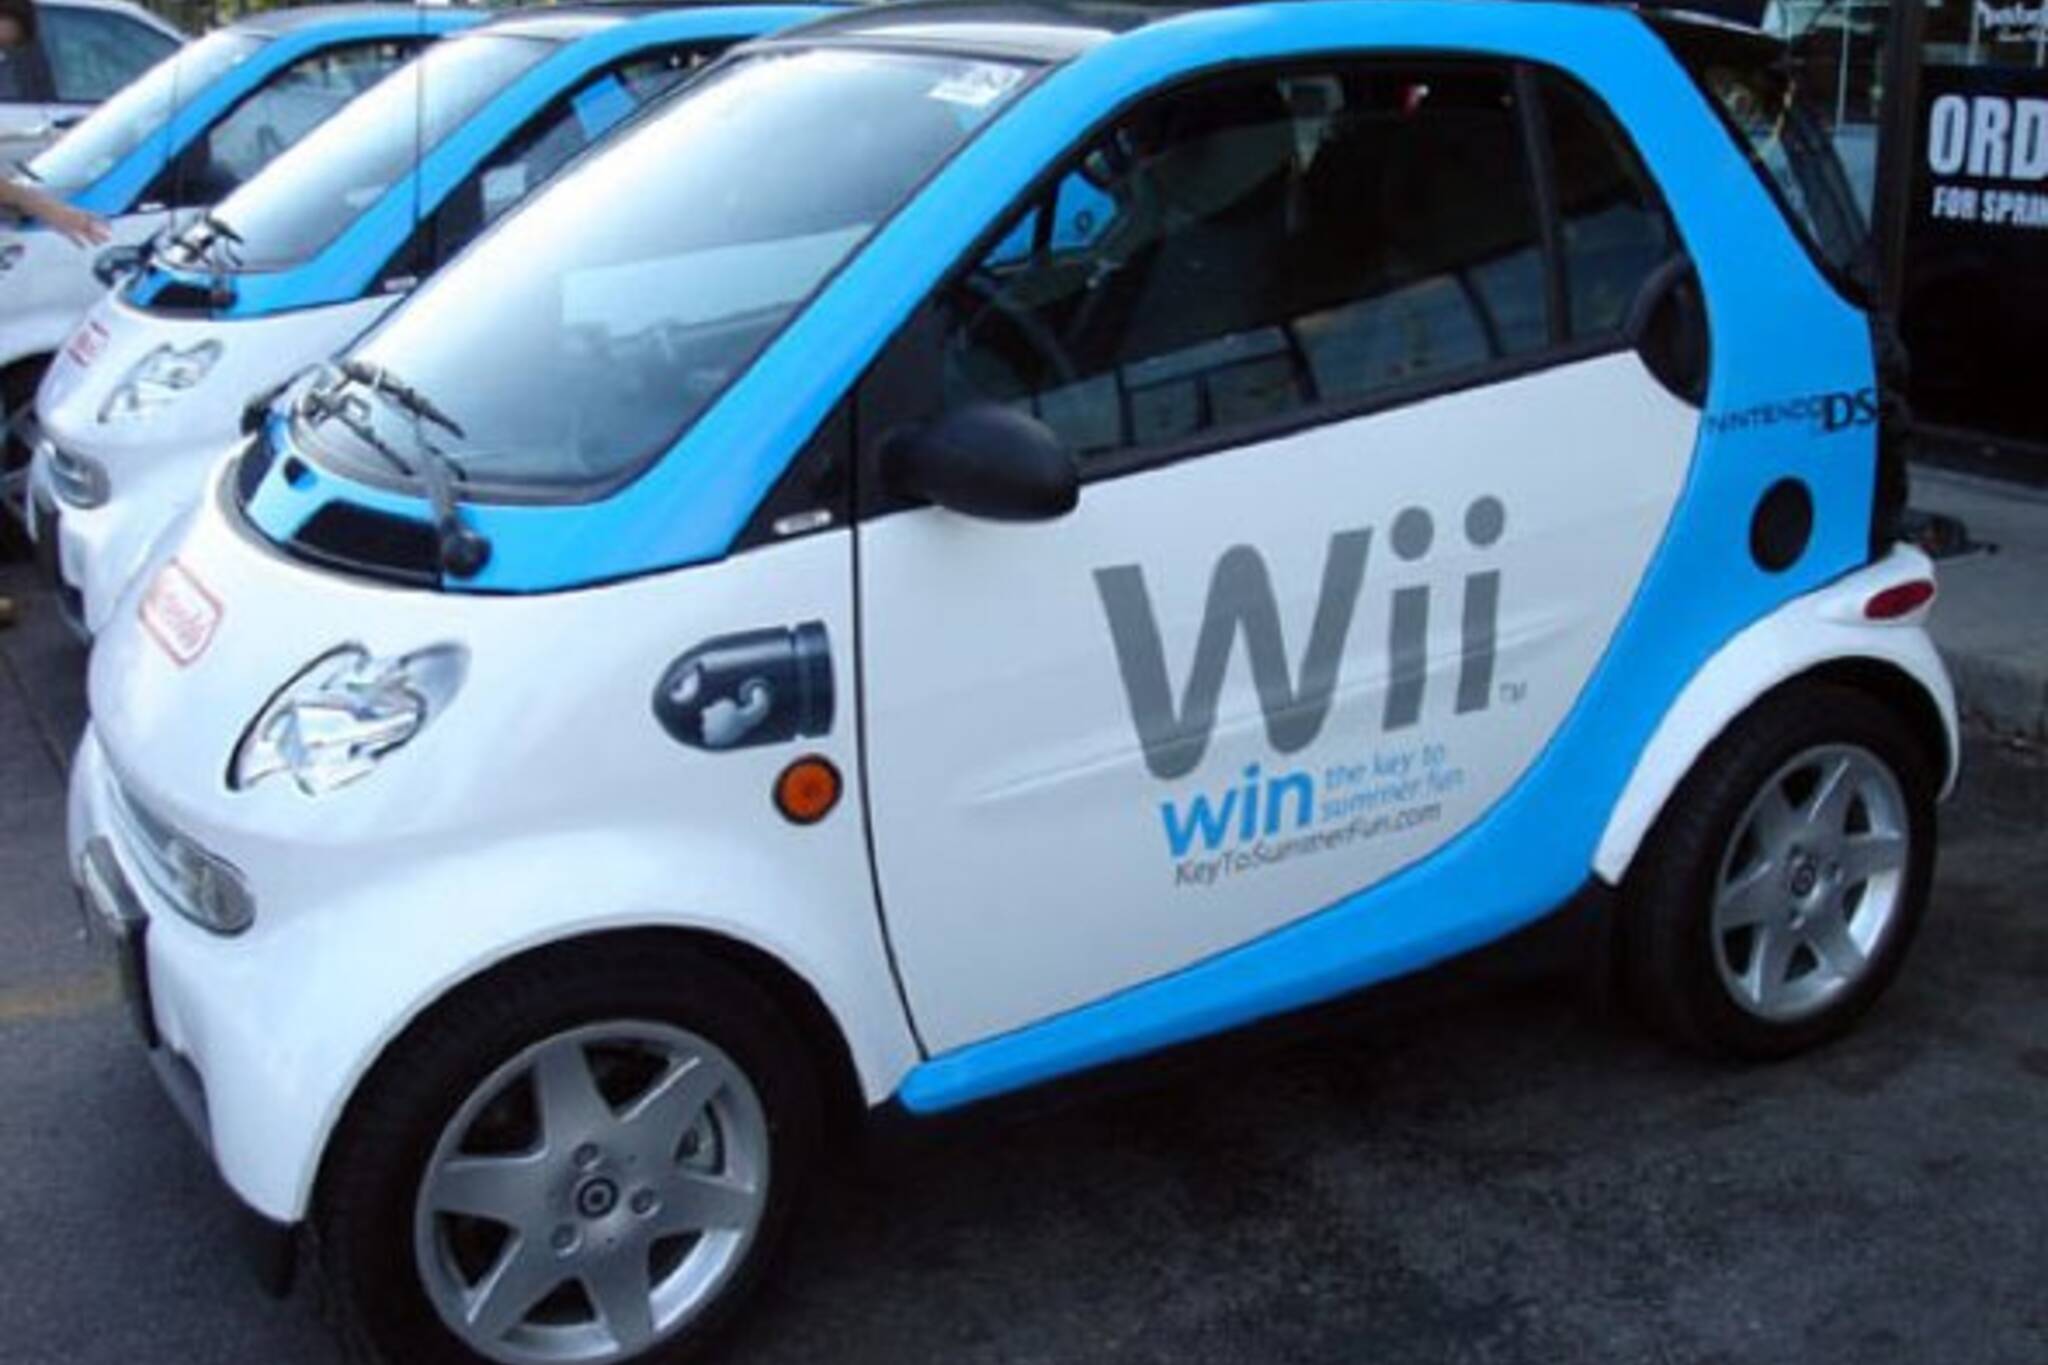 Henstilling en kreditor flydende Toronto Gets Wii on Wheels